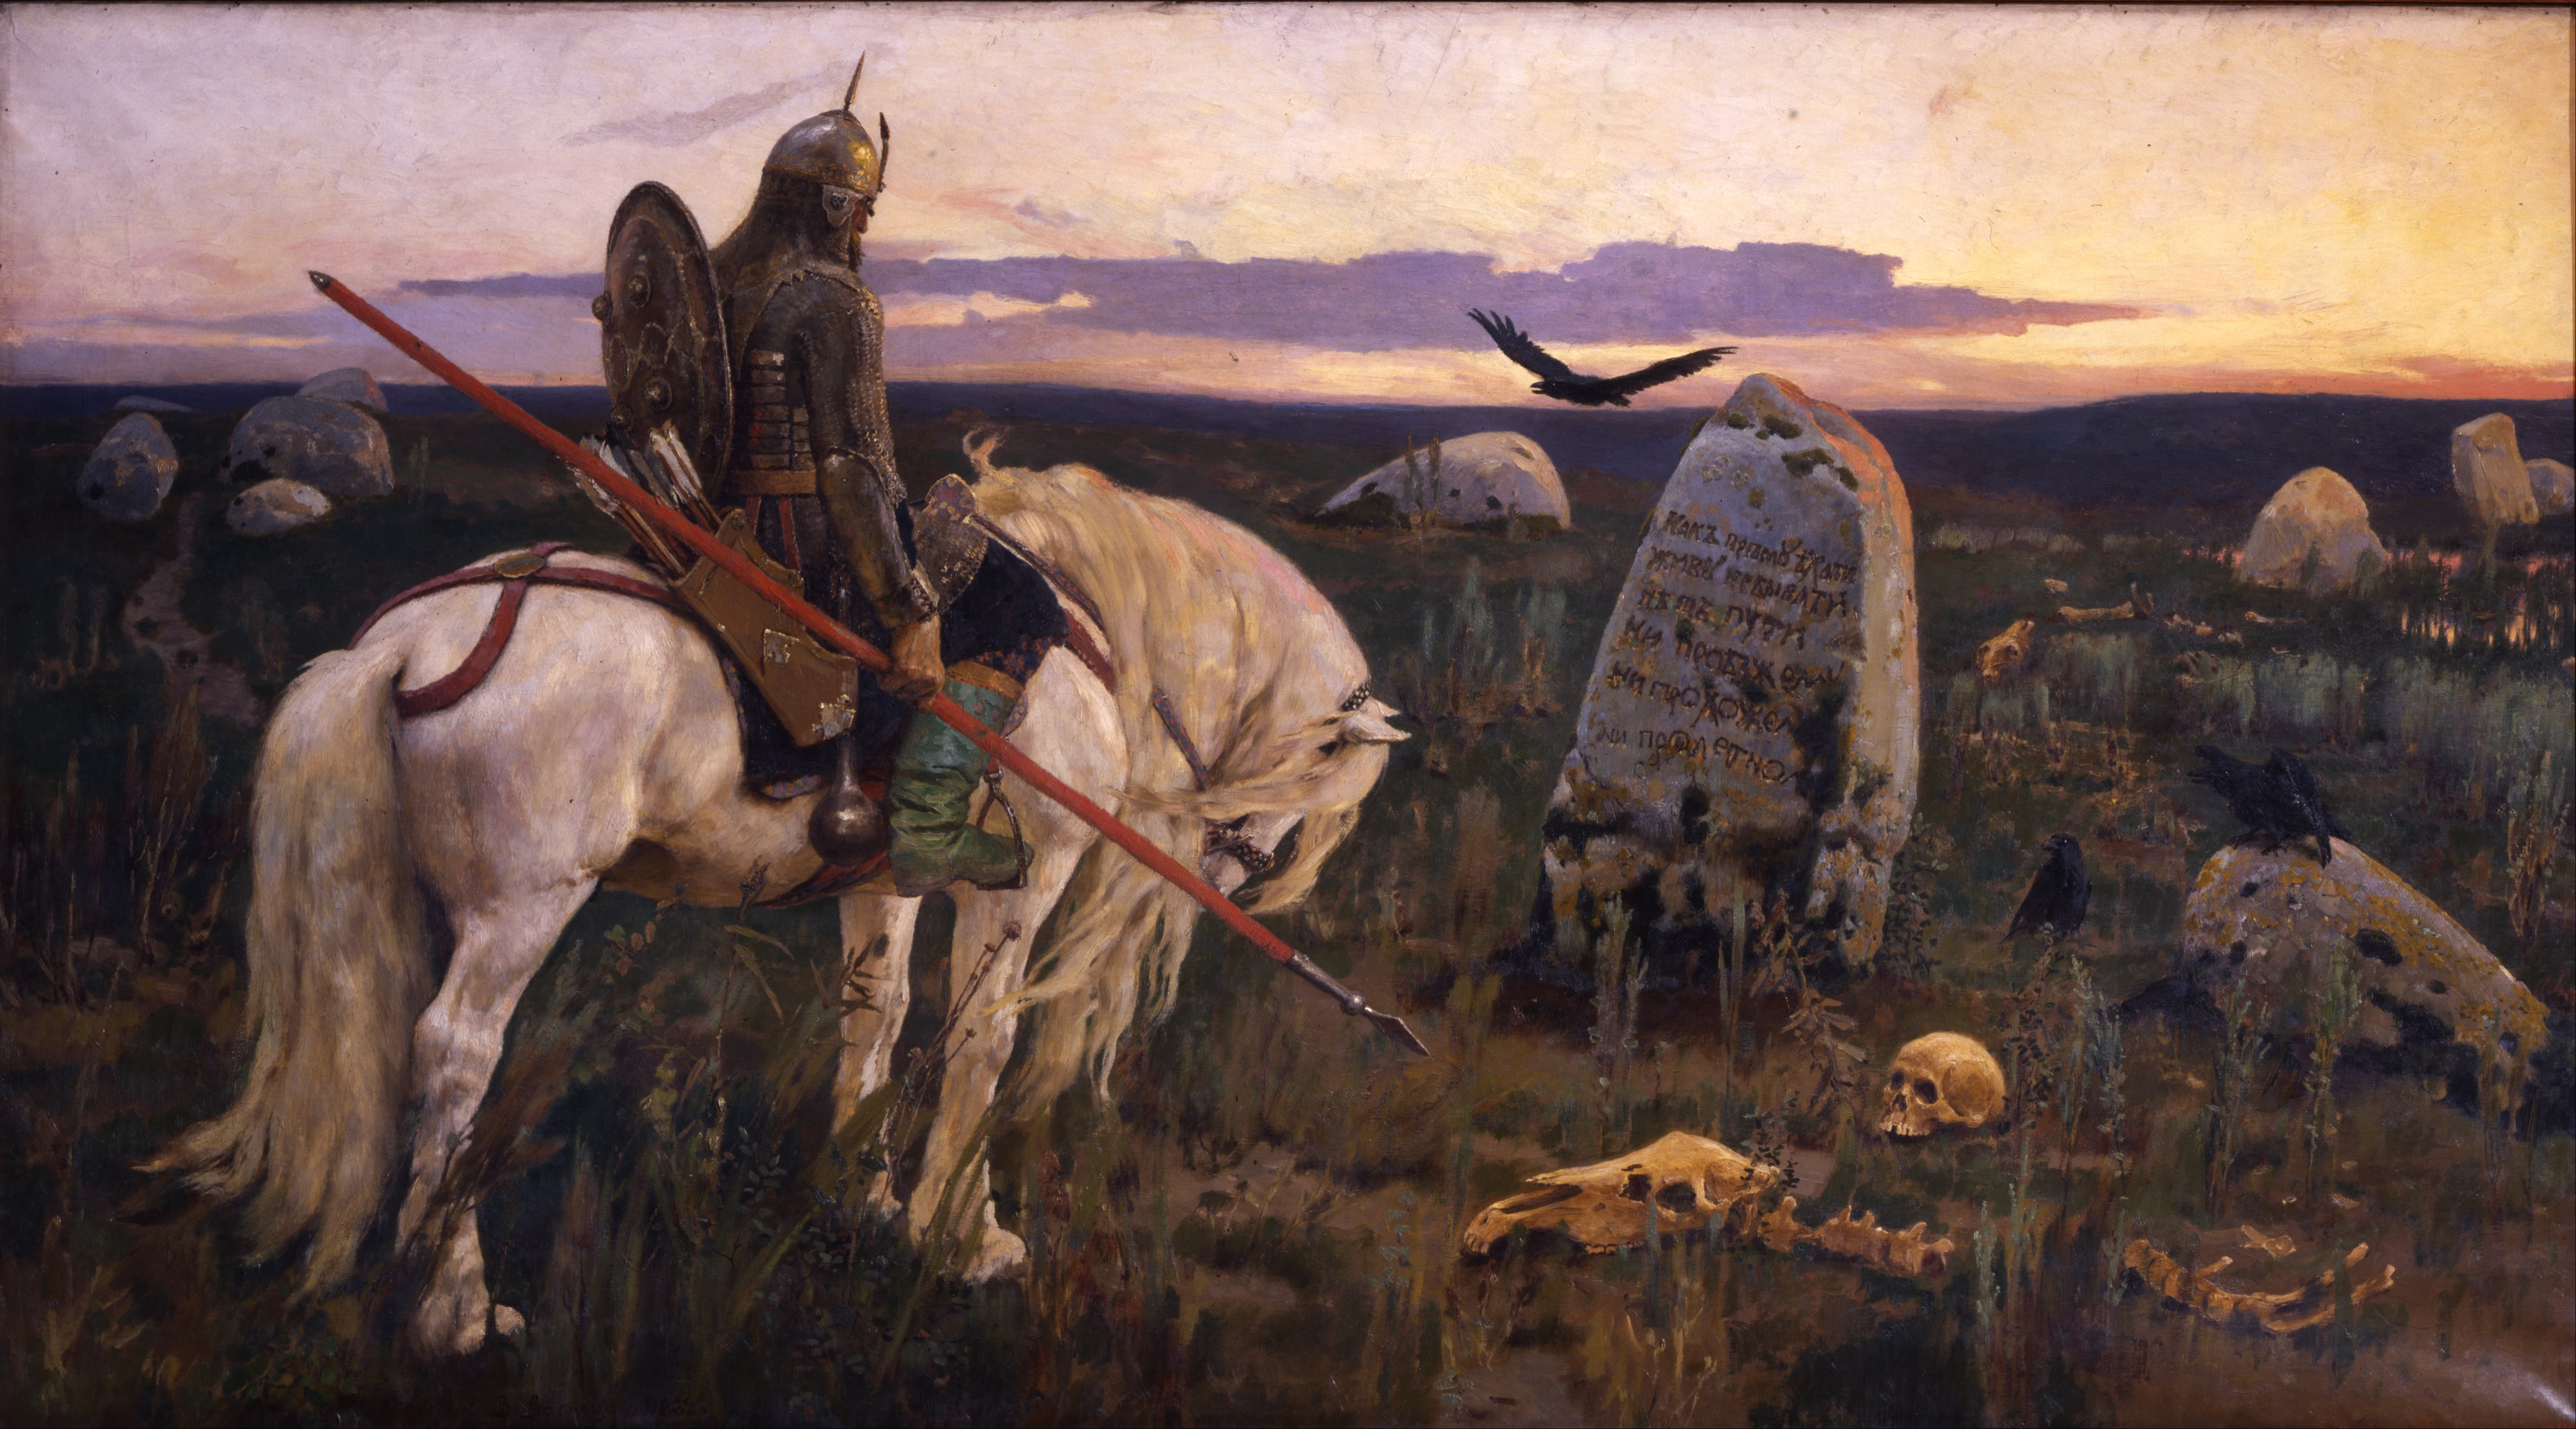 Viktor Vasnetsov, Knight at the Crossroads, 1882. (Image source: Russian Museum, Saint Petersburg).